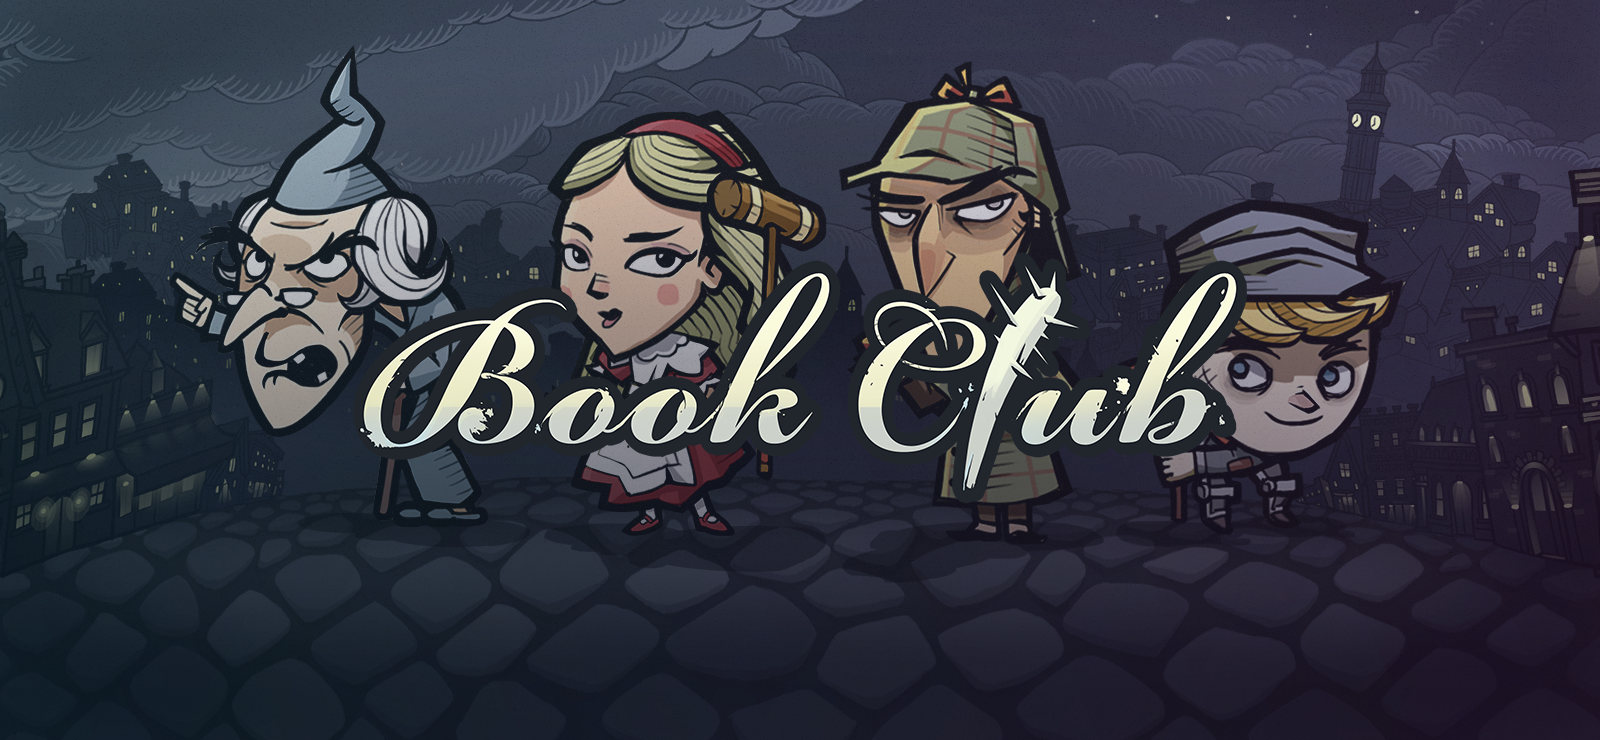 Antihero Book Club